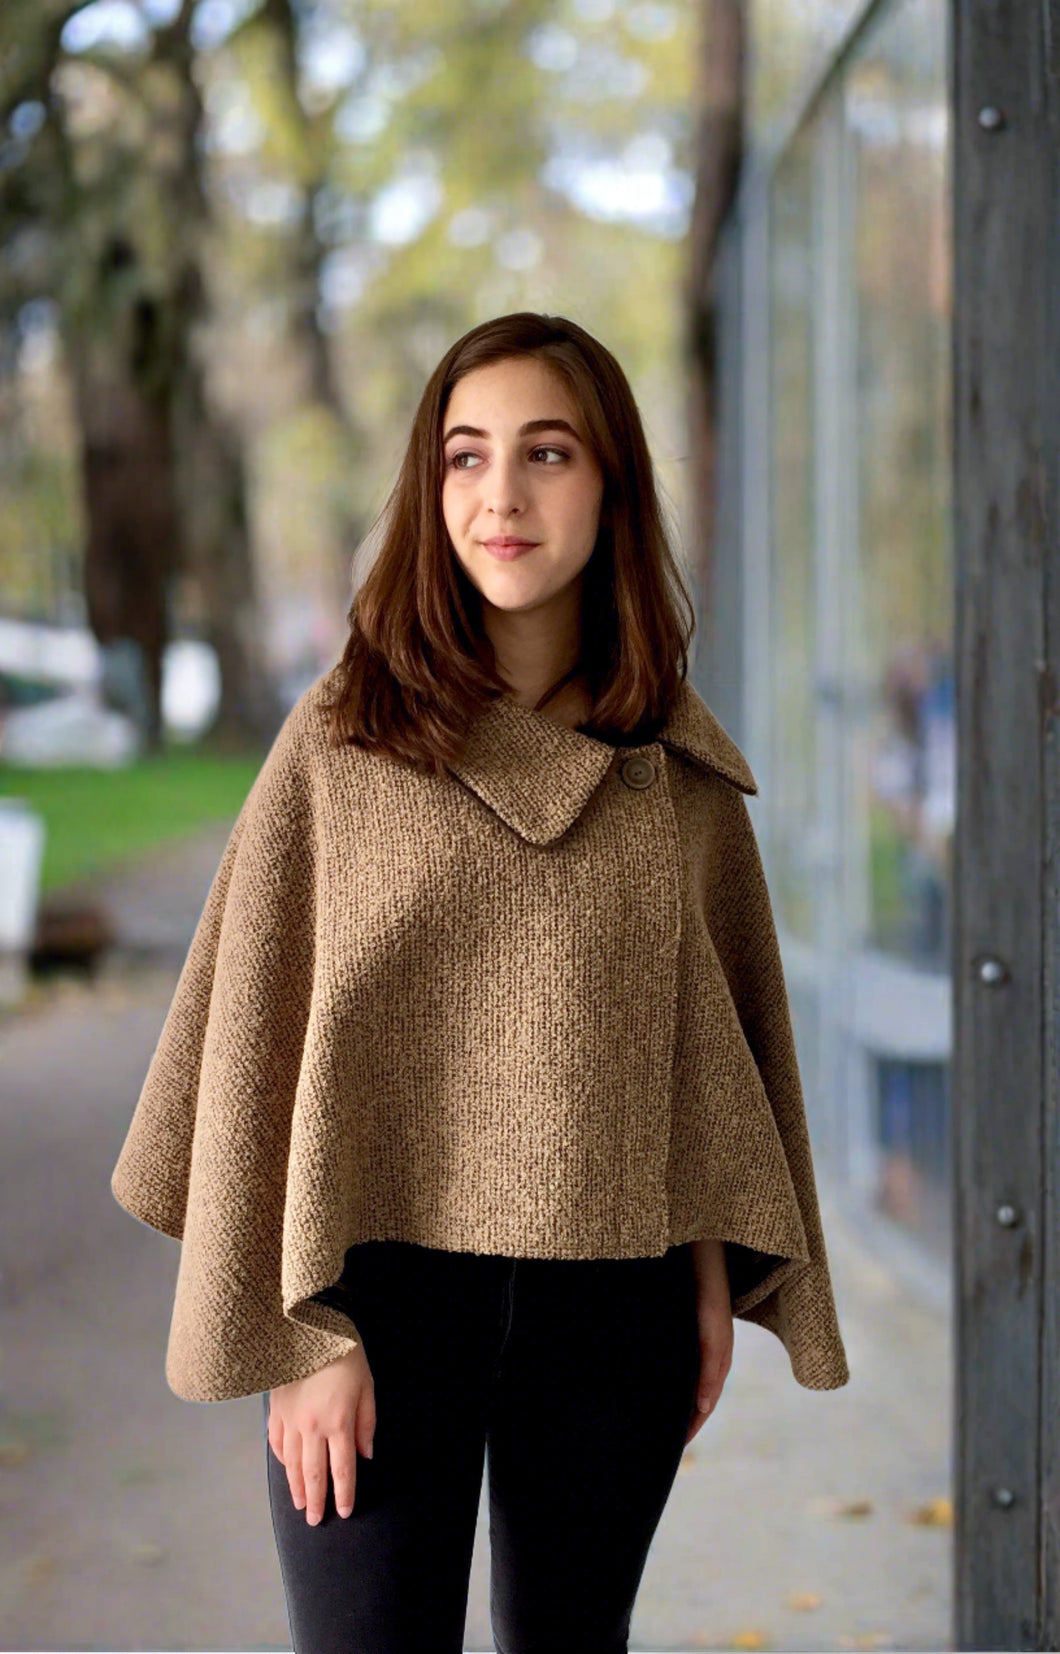 Alexandra Short Capelette - 100% Pure Merino Wool